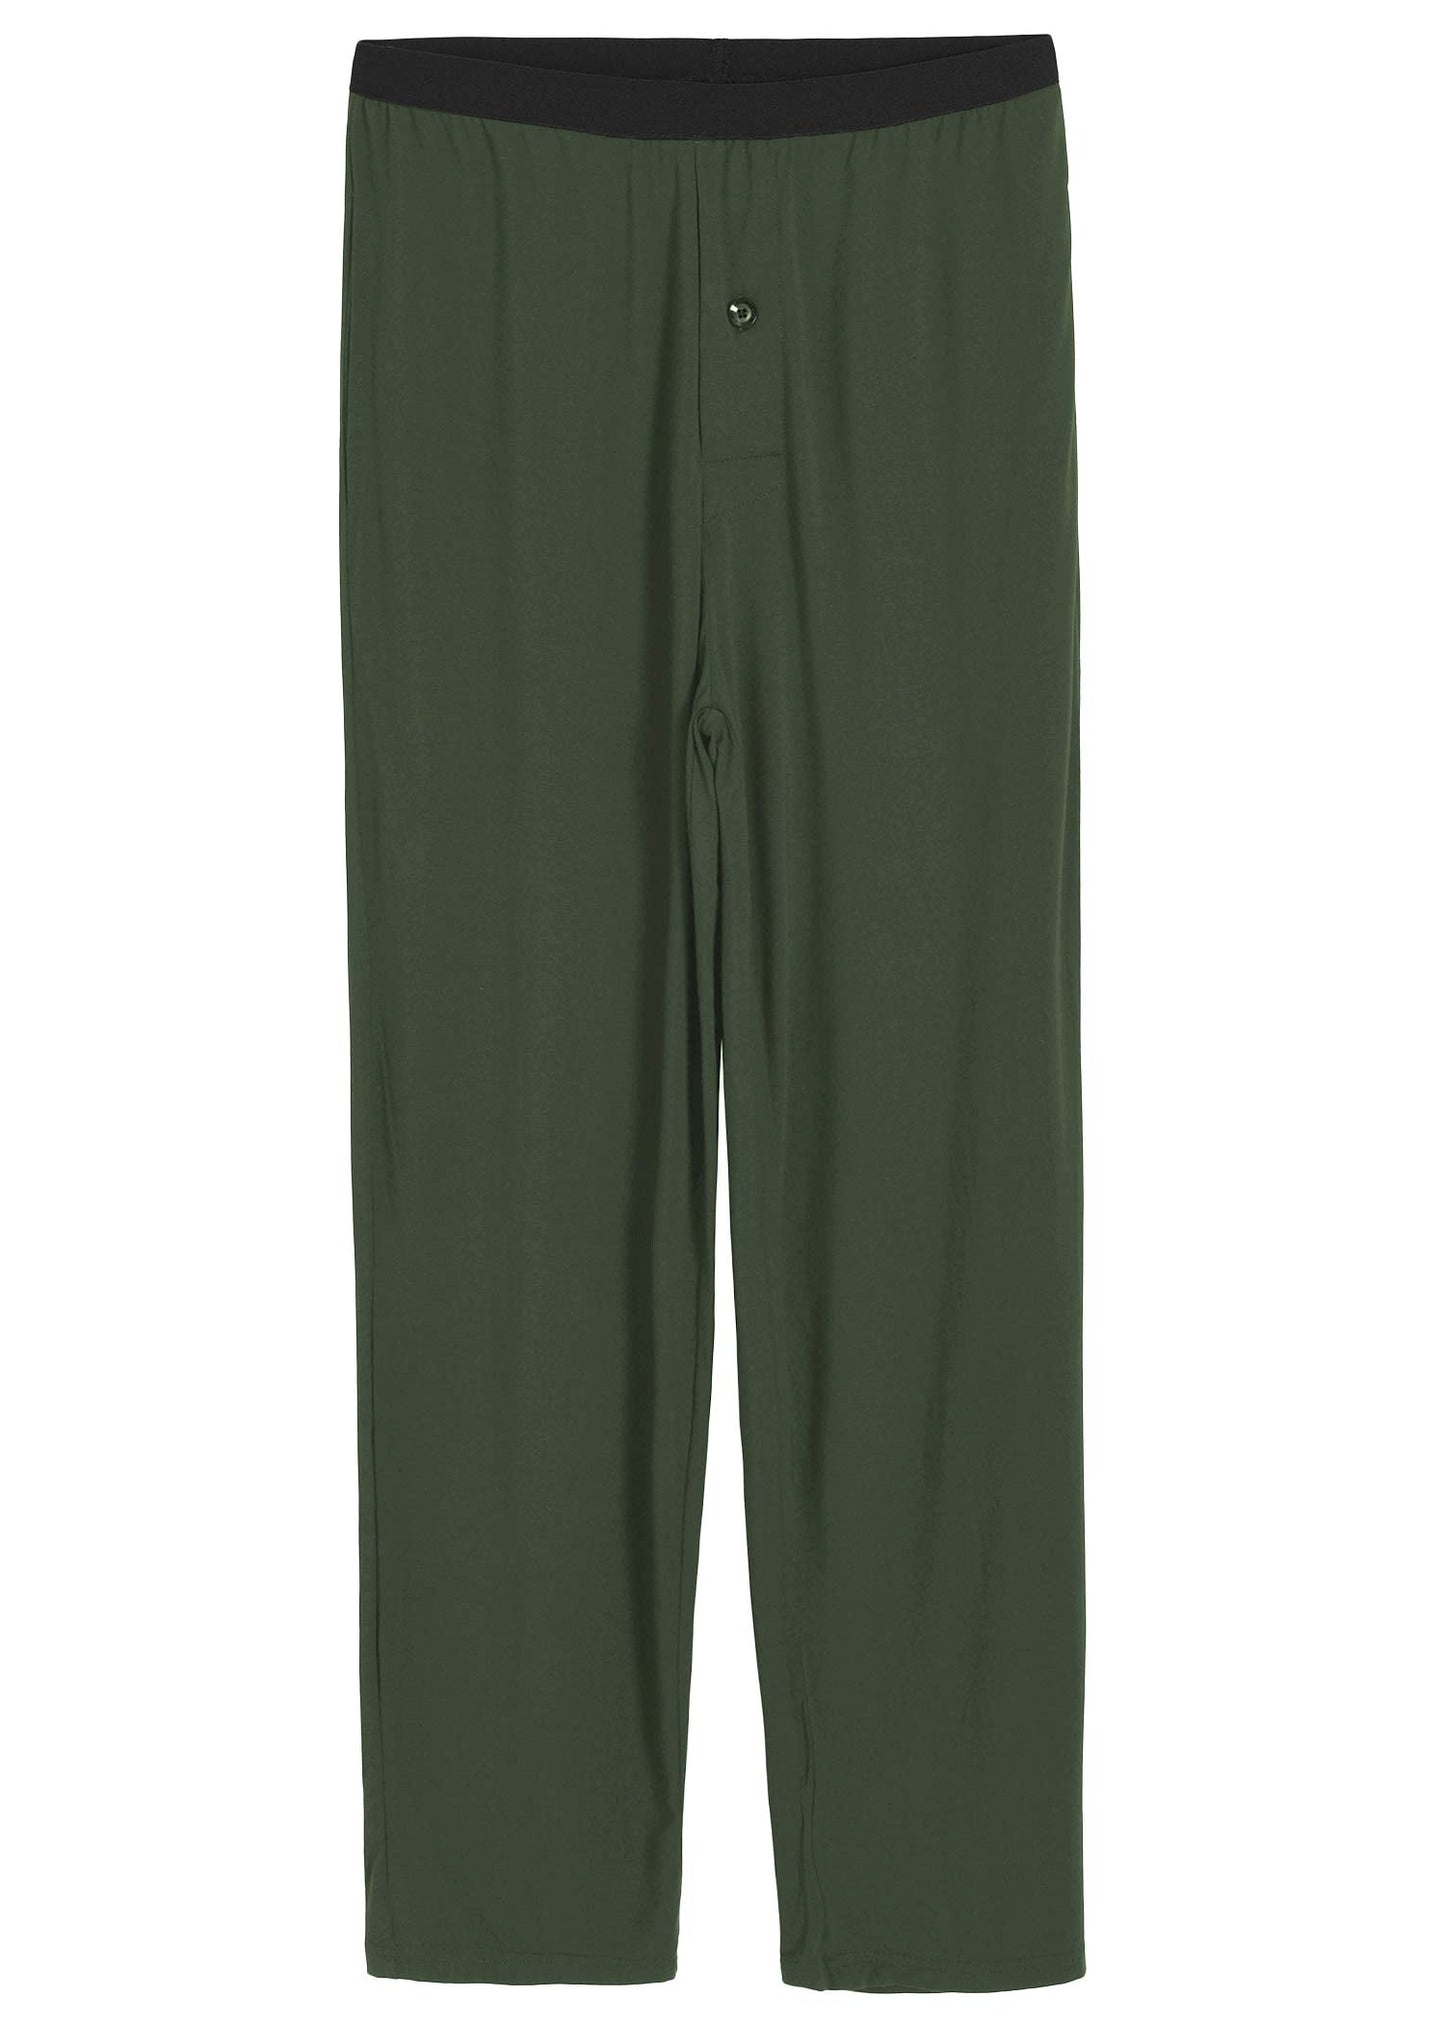 Men's Bamboo Viscose Pajama Bottoms Lounge Pants with Pockets - Latuza